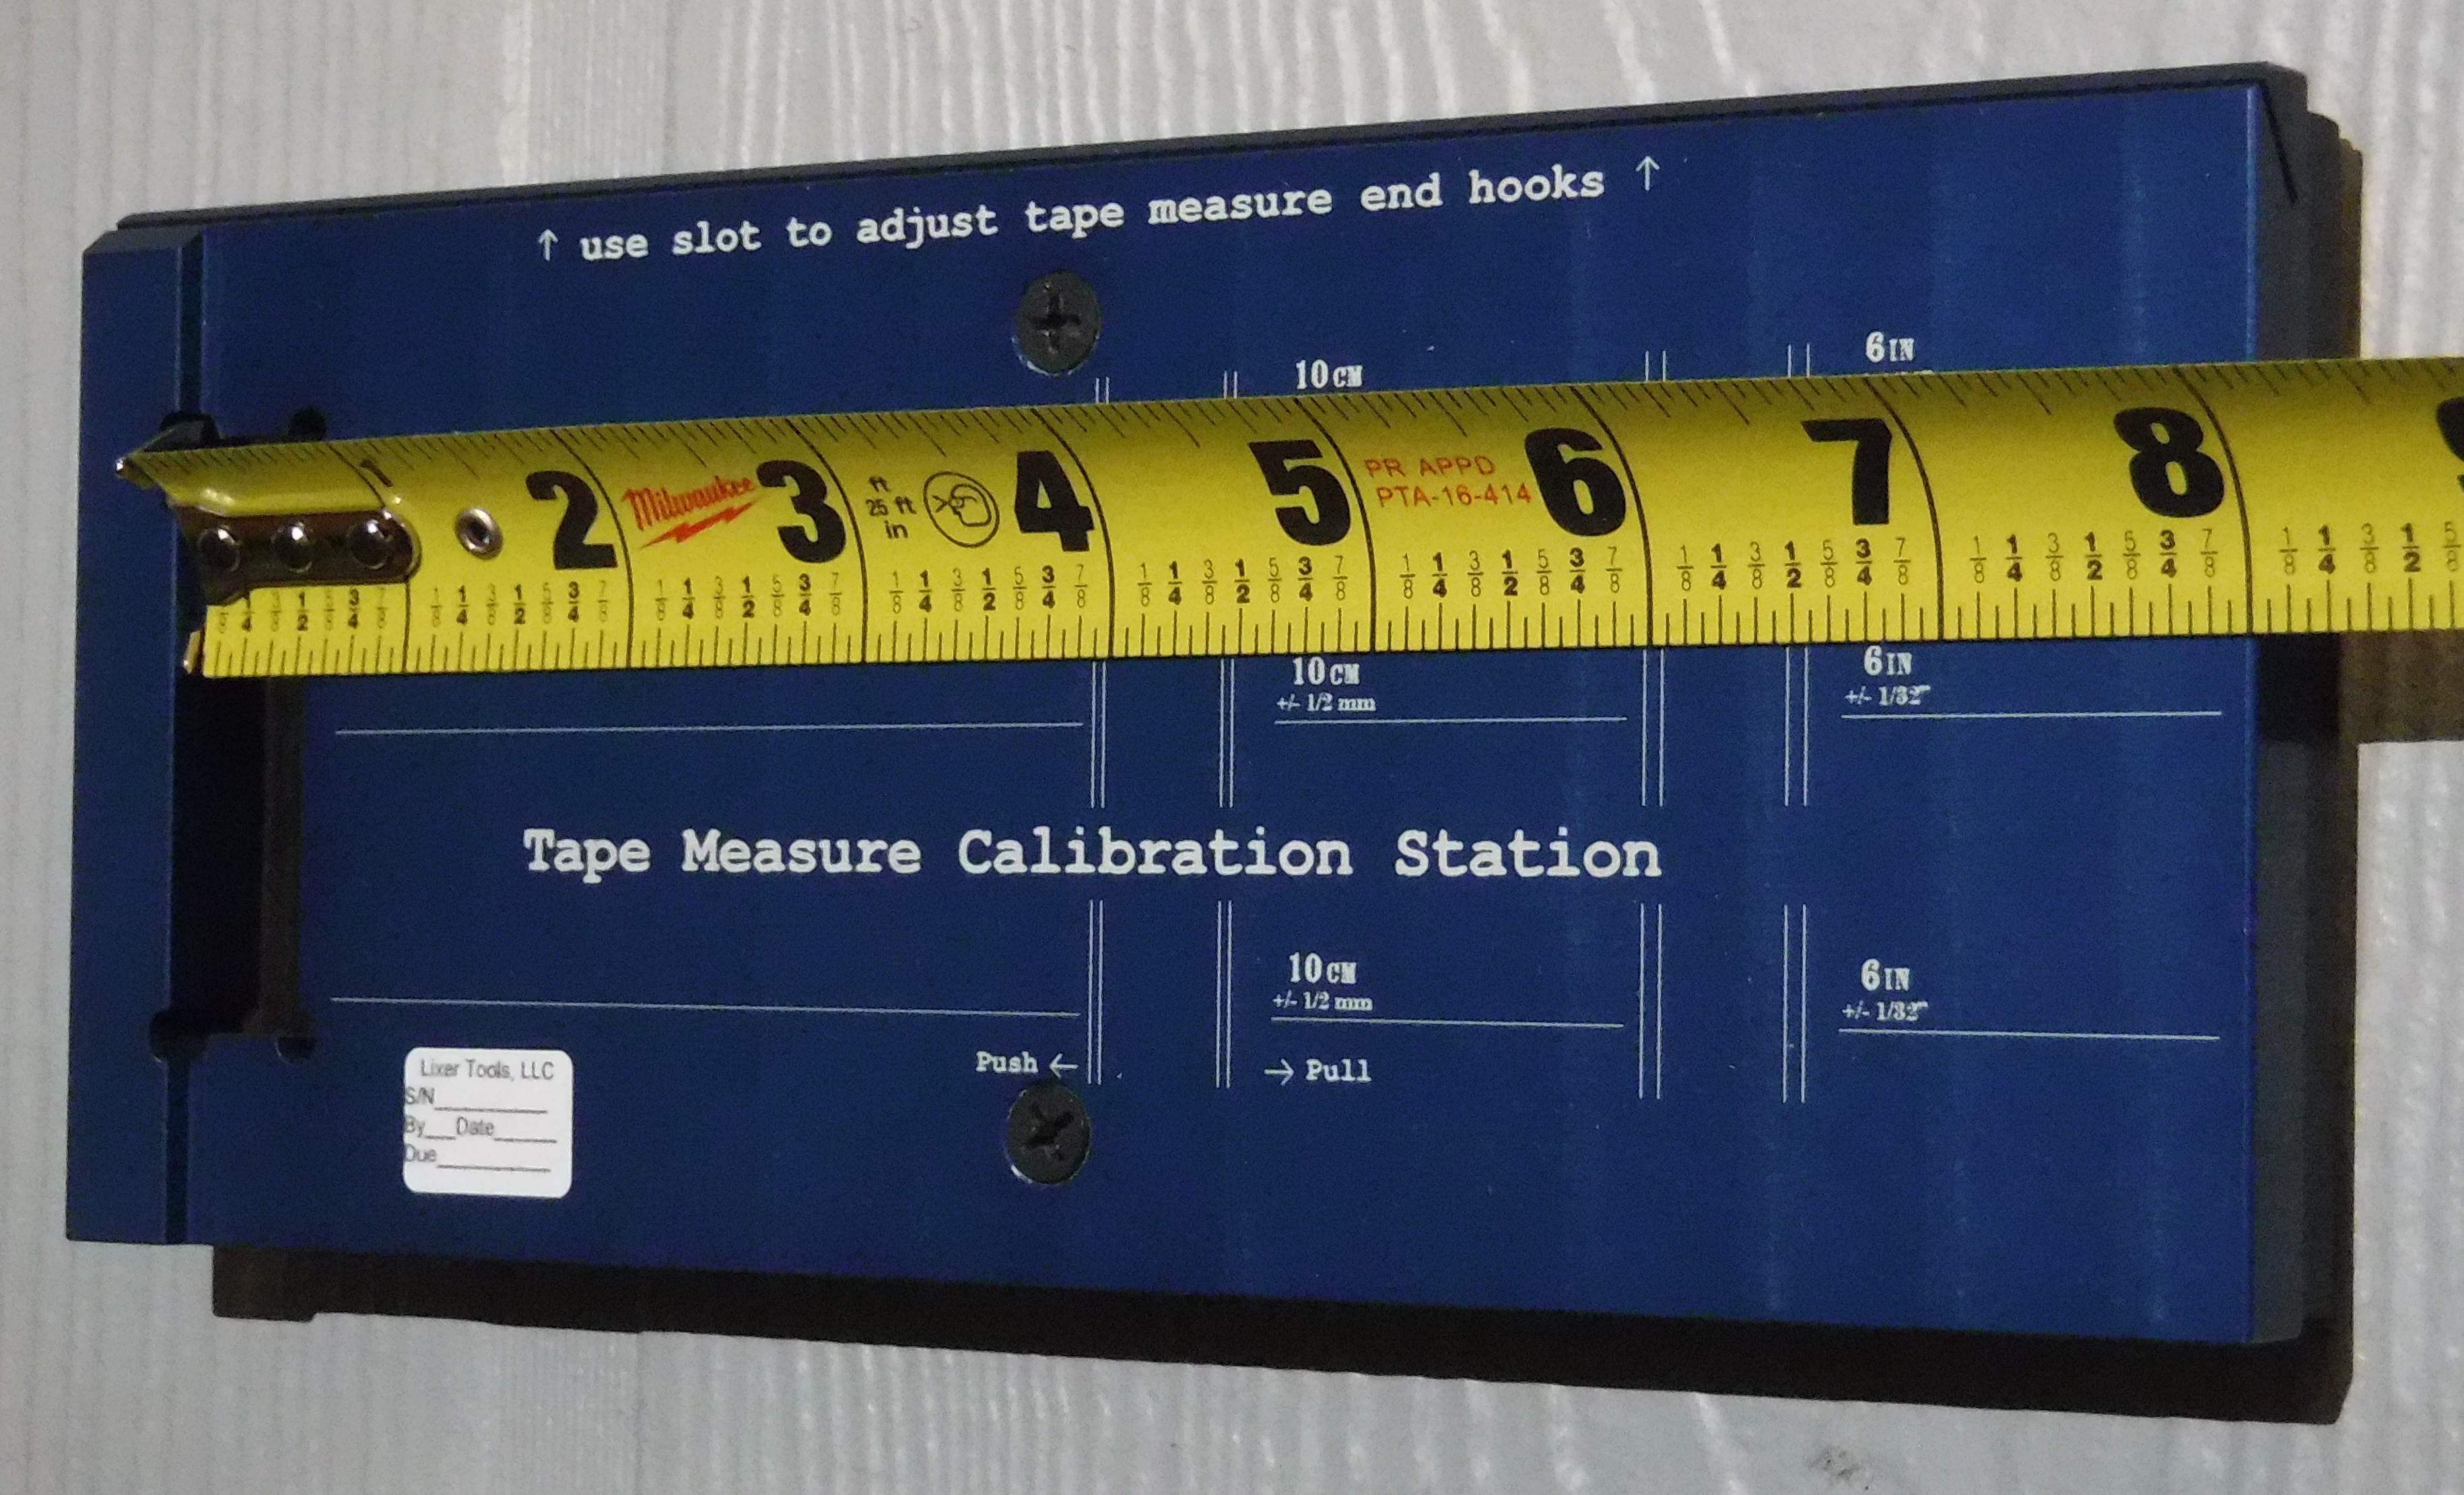 Lixer Pass/Fail Tape Measure Calibration Station